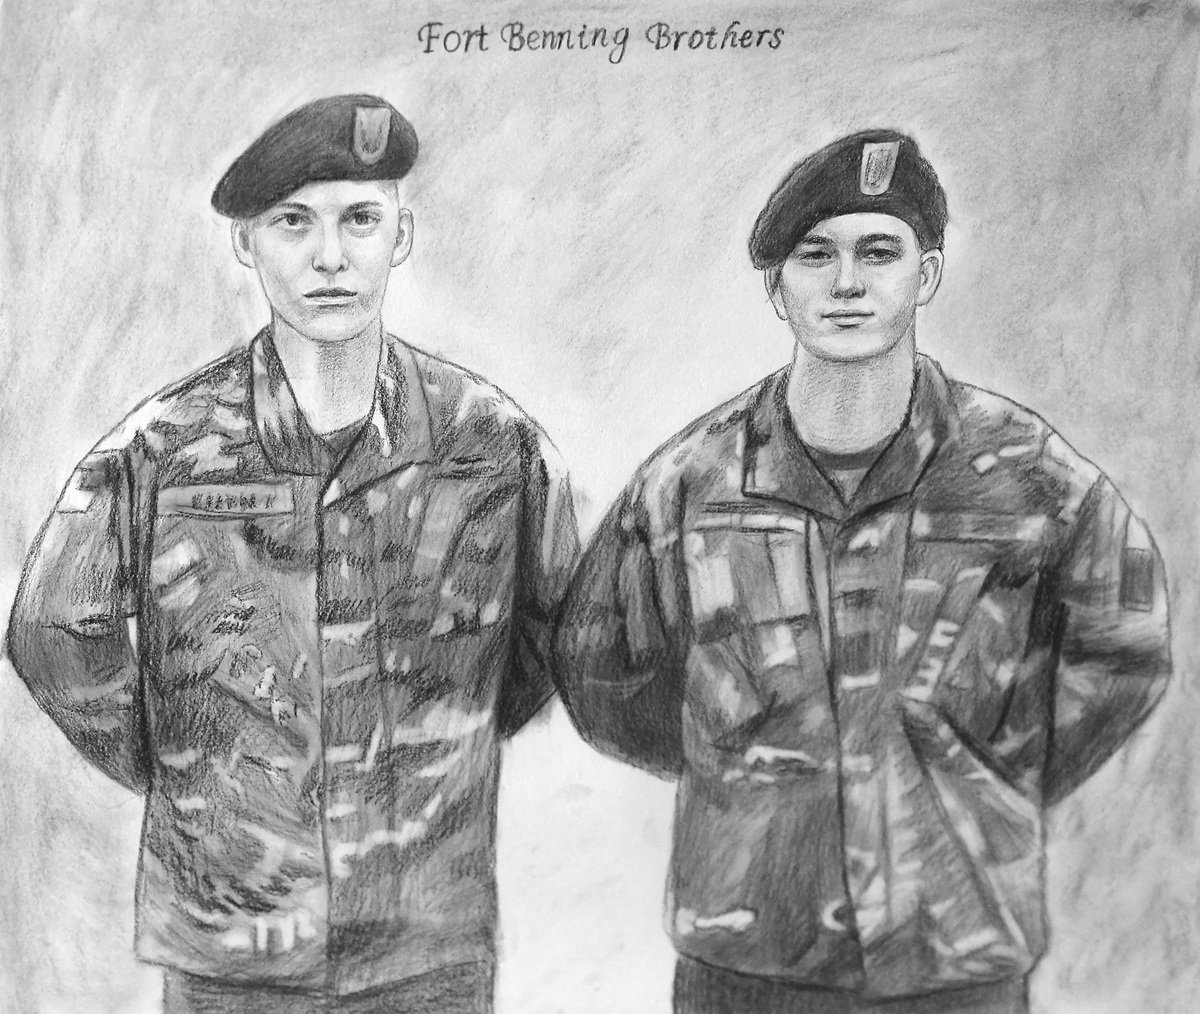 A custom best friend portrait featuring two soldiers in uniform.